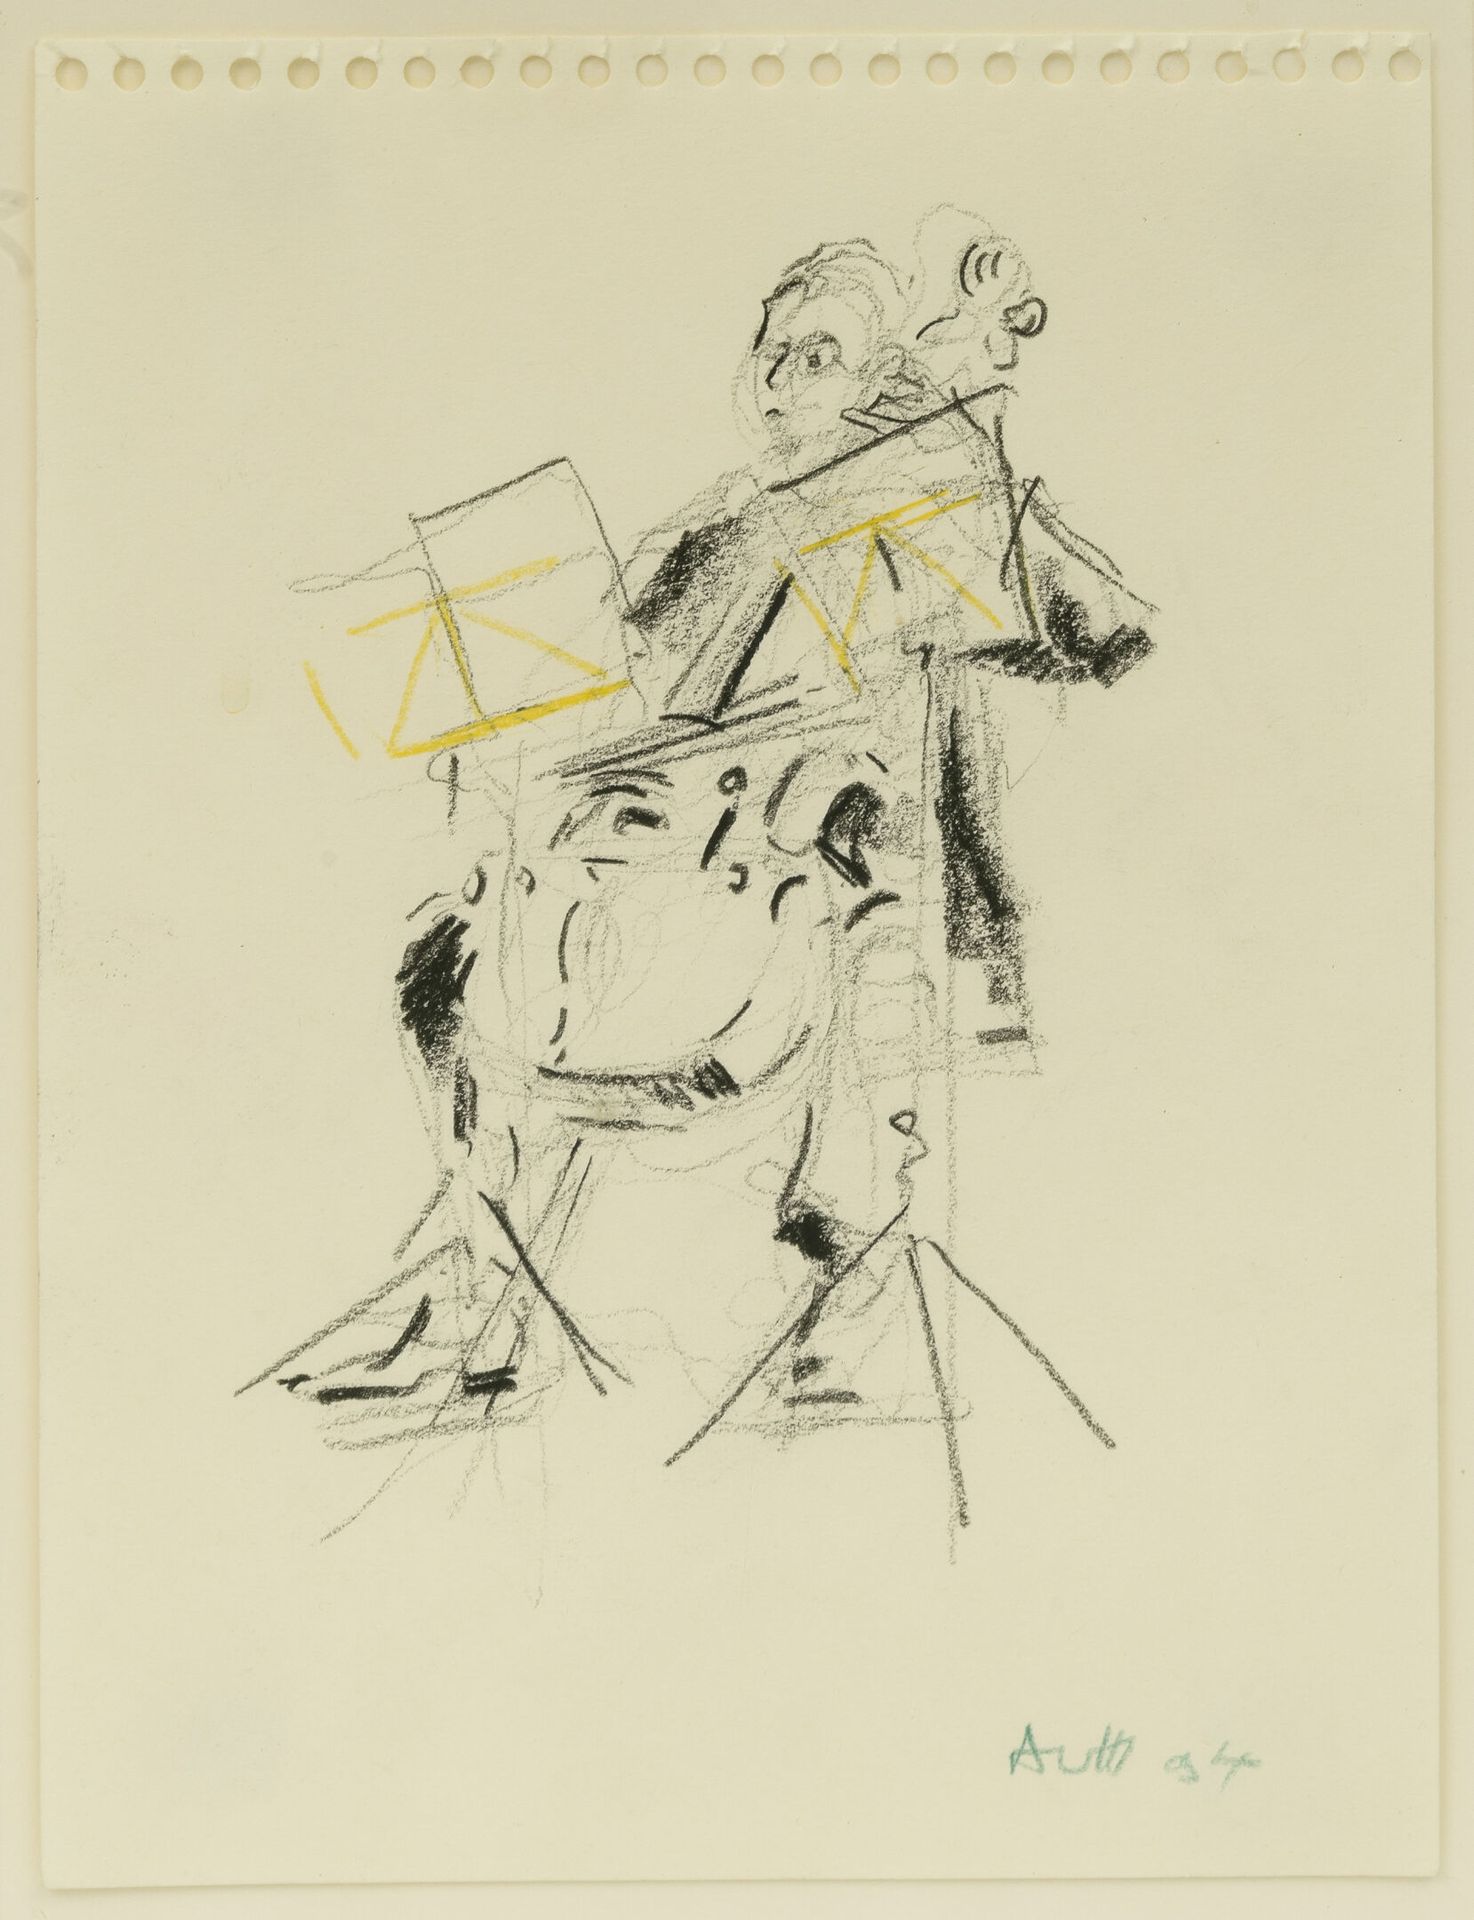 Daniel AUTHOUART (1943) 低音提琴手，1994年。

纸上石墨和彩色铅笔。

右下方有签名和日期。

20 x 15厘米。